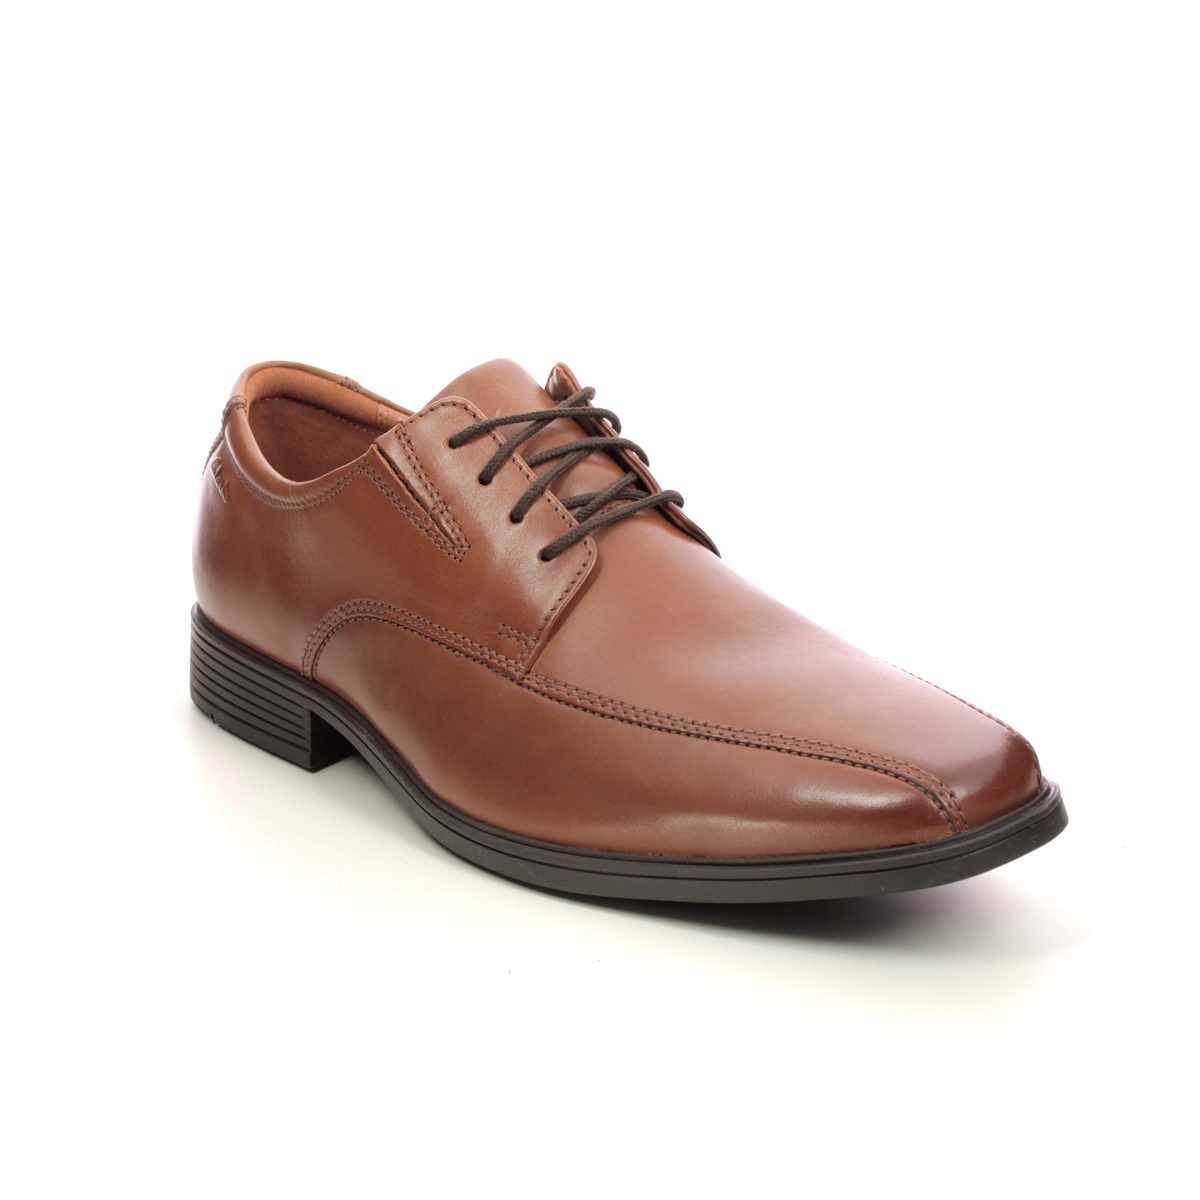 Clarks Tilden Walk Dark Tan Mens formal shoes 3009-58H in a Plain Leather in Size 8